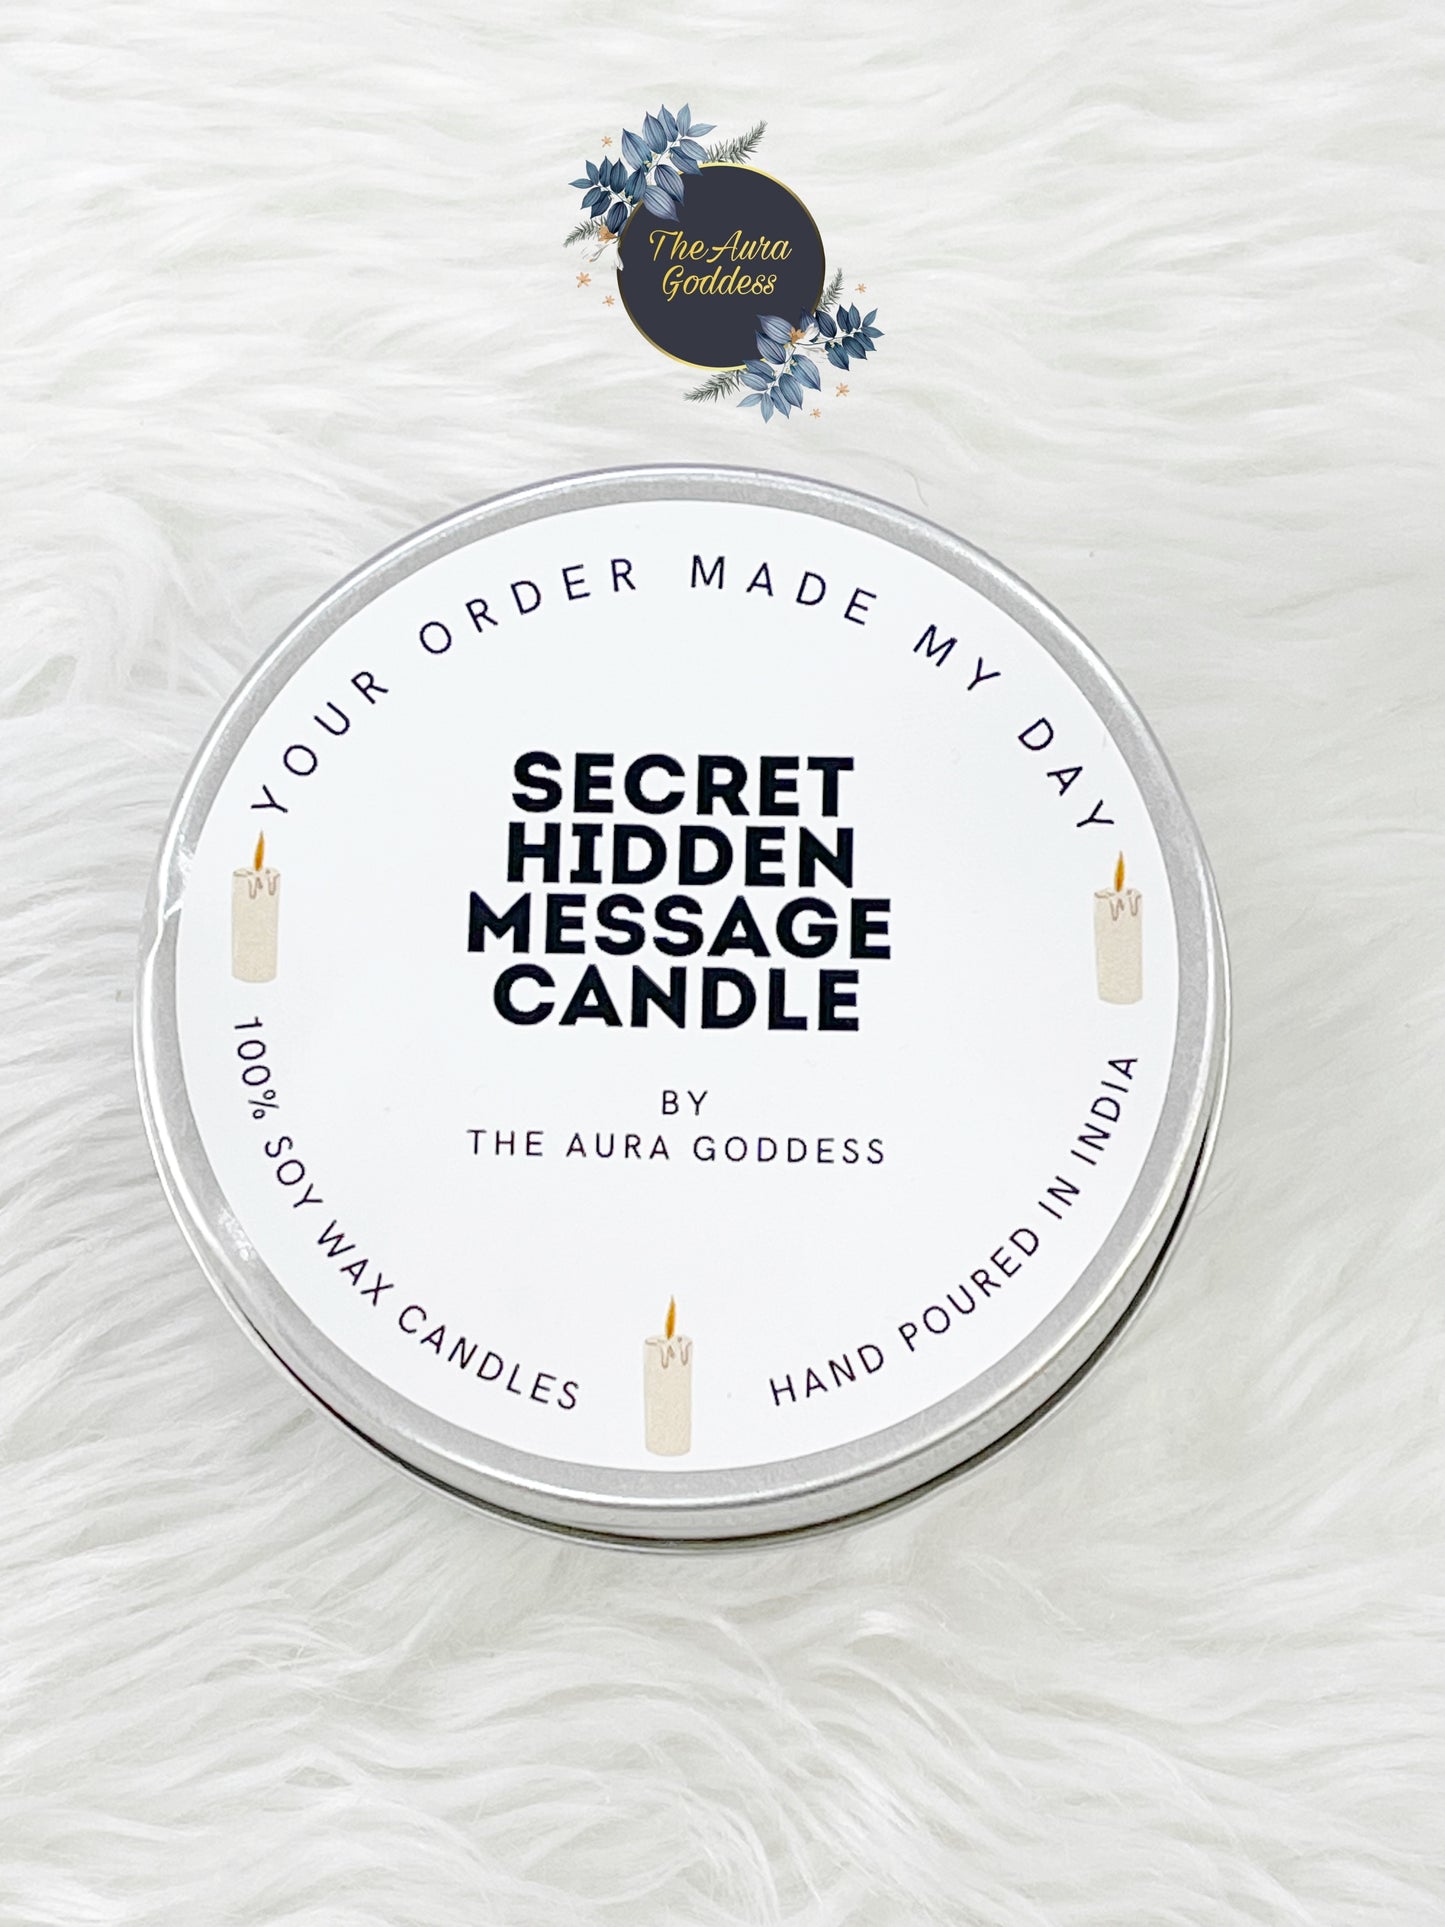 Secret hidden message candle